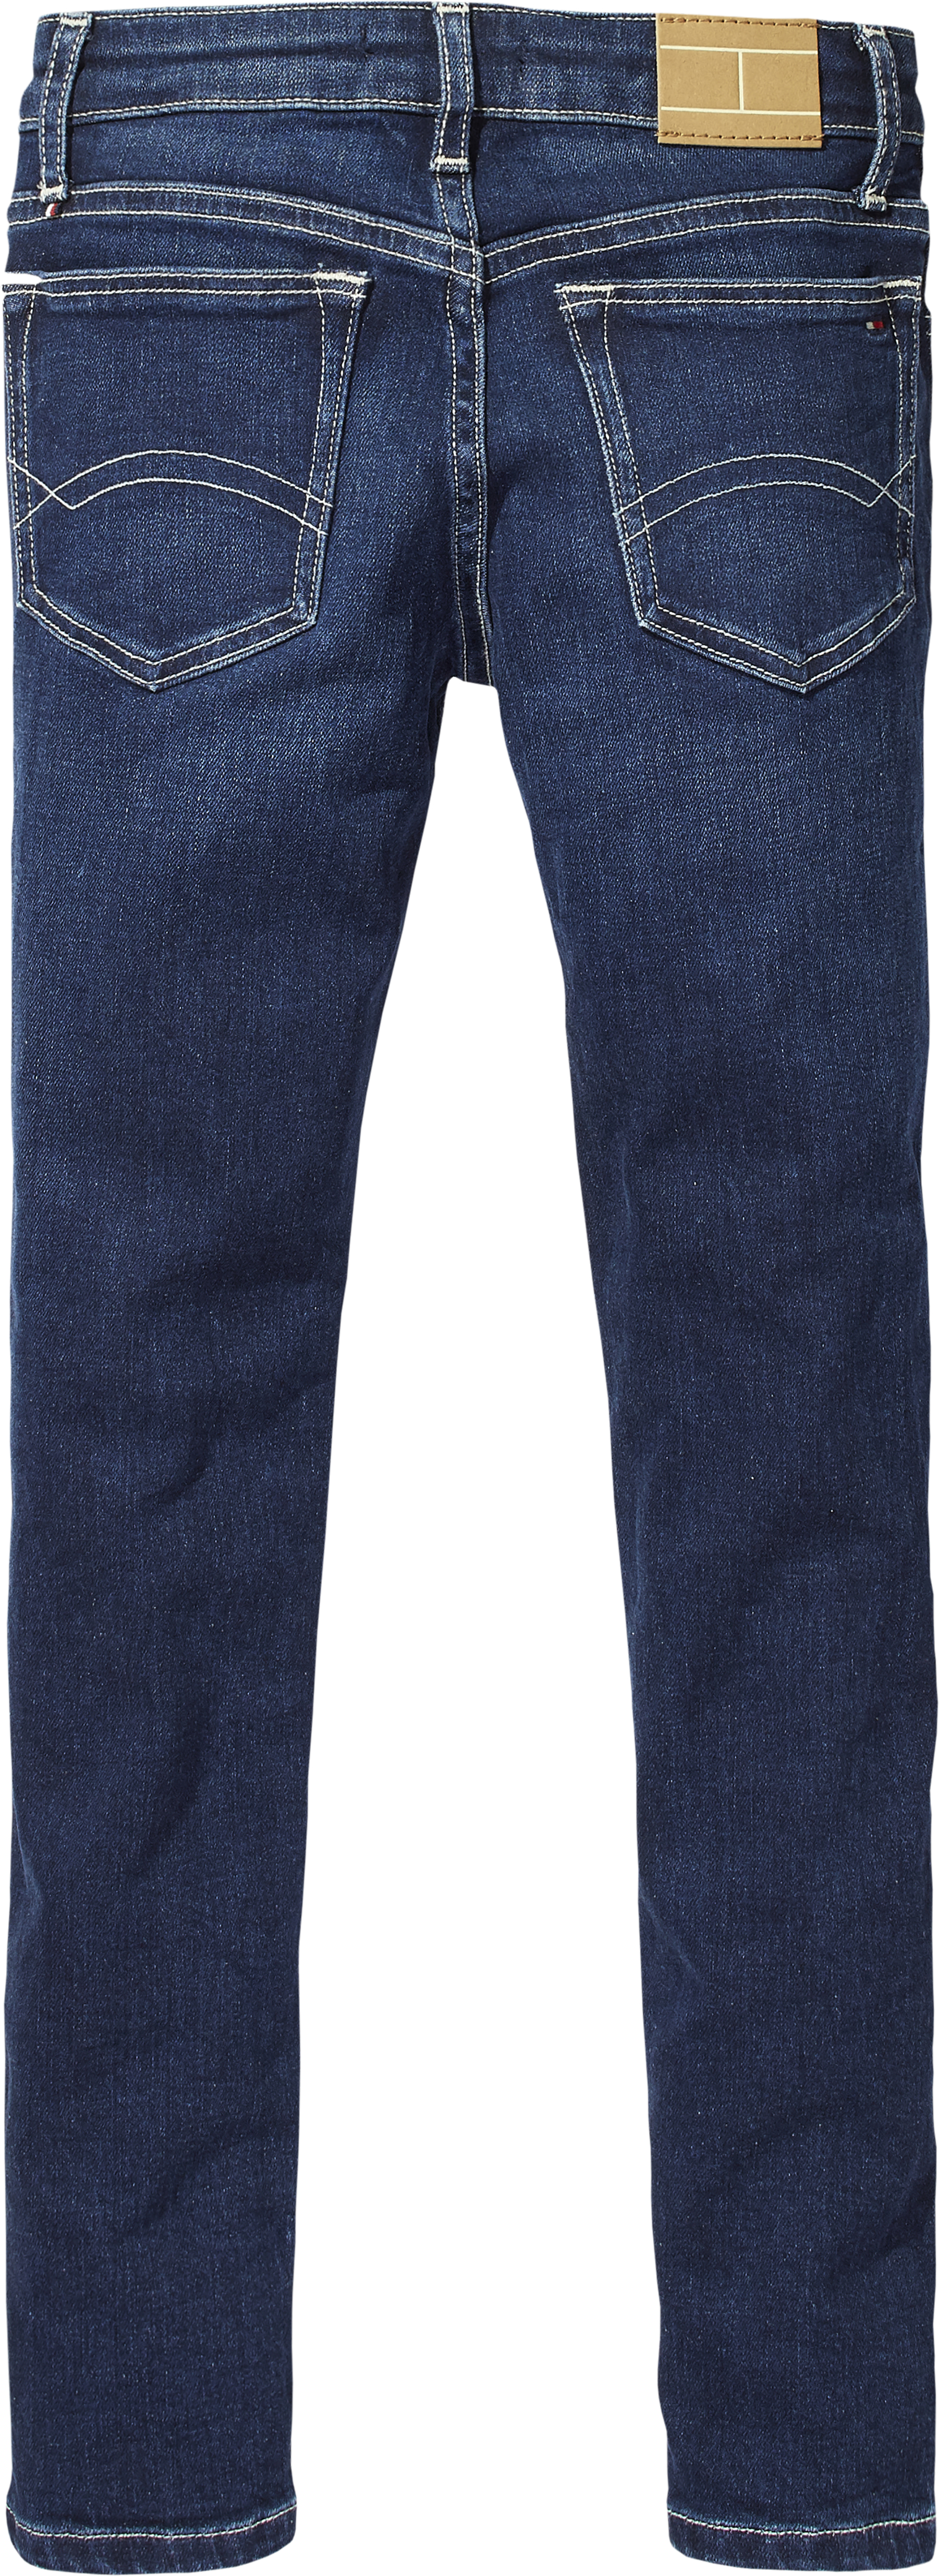 Nora Skinny Jeans, Mørkeblå, 74 cm